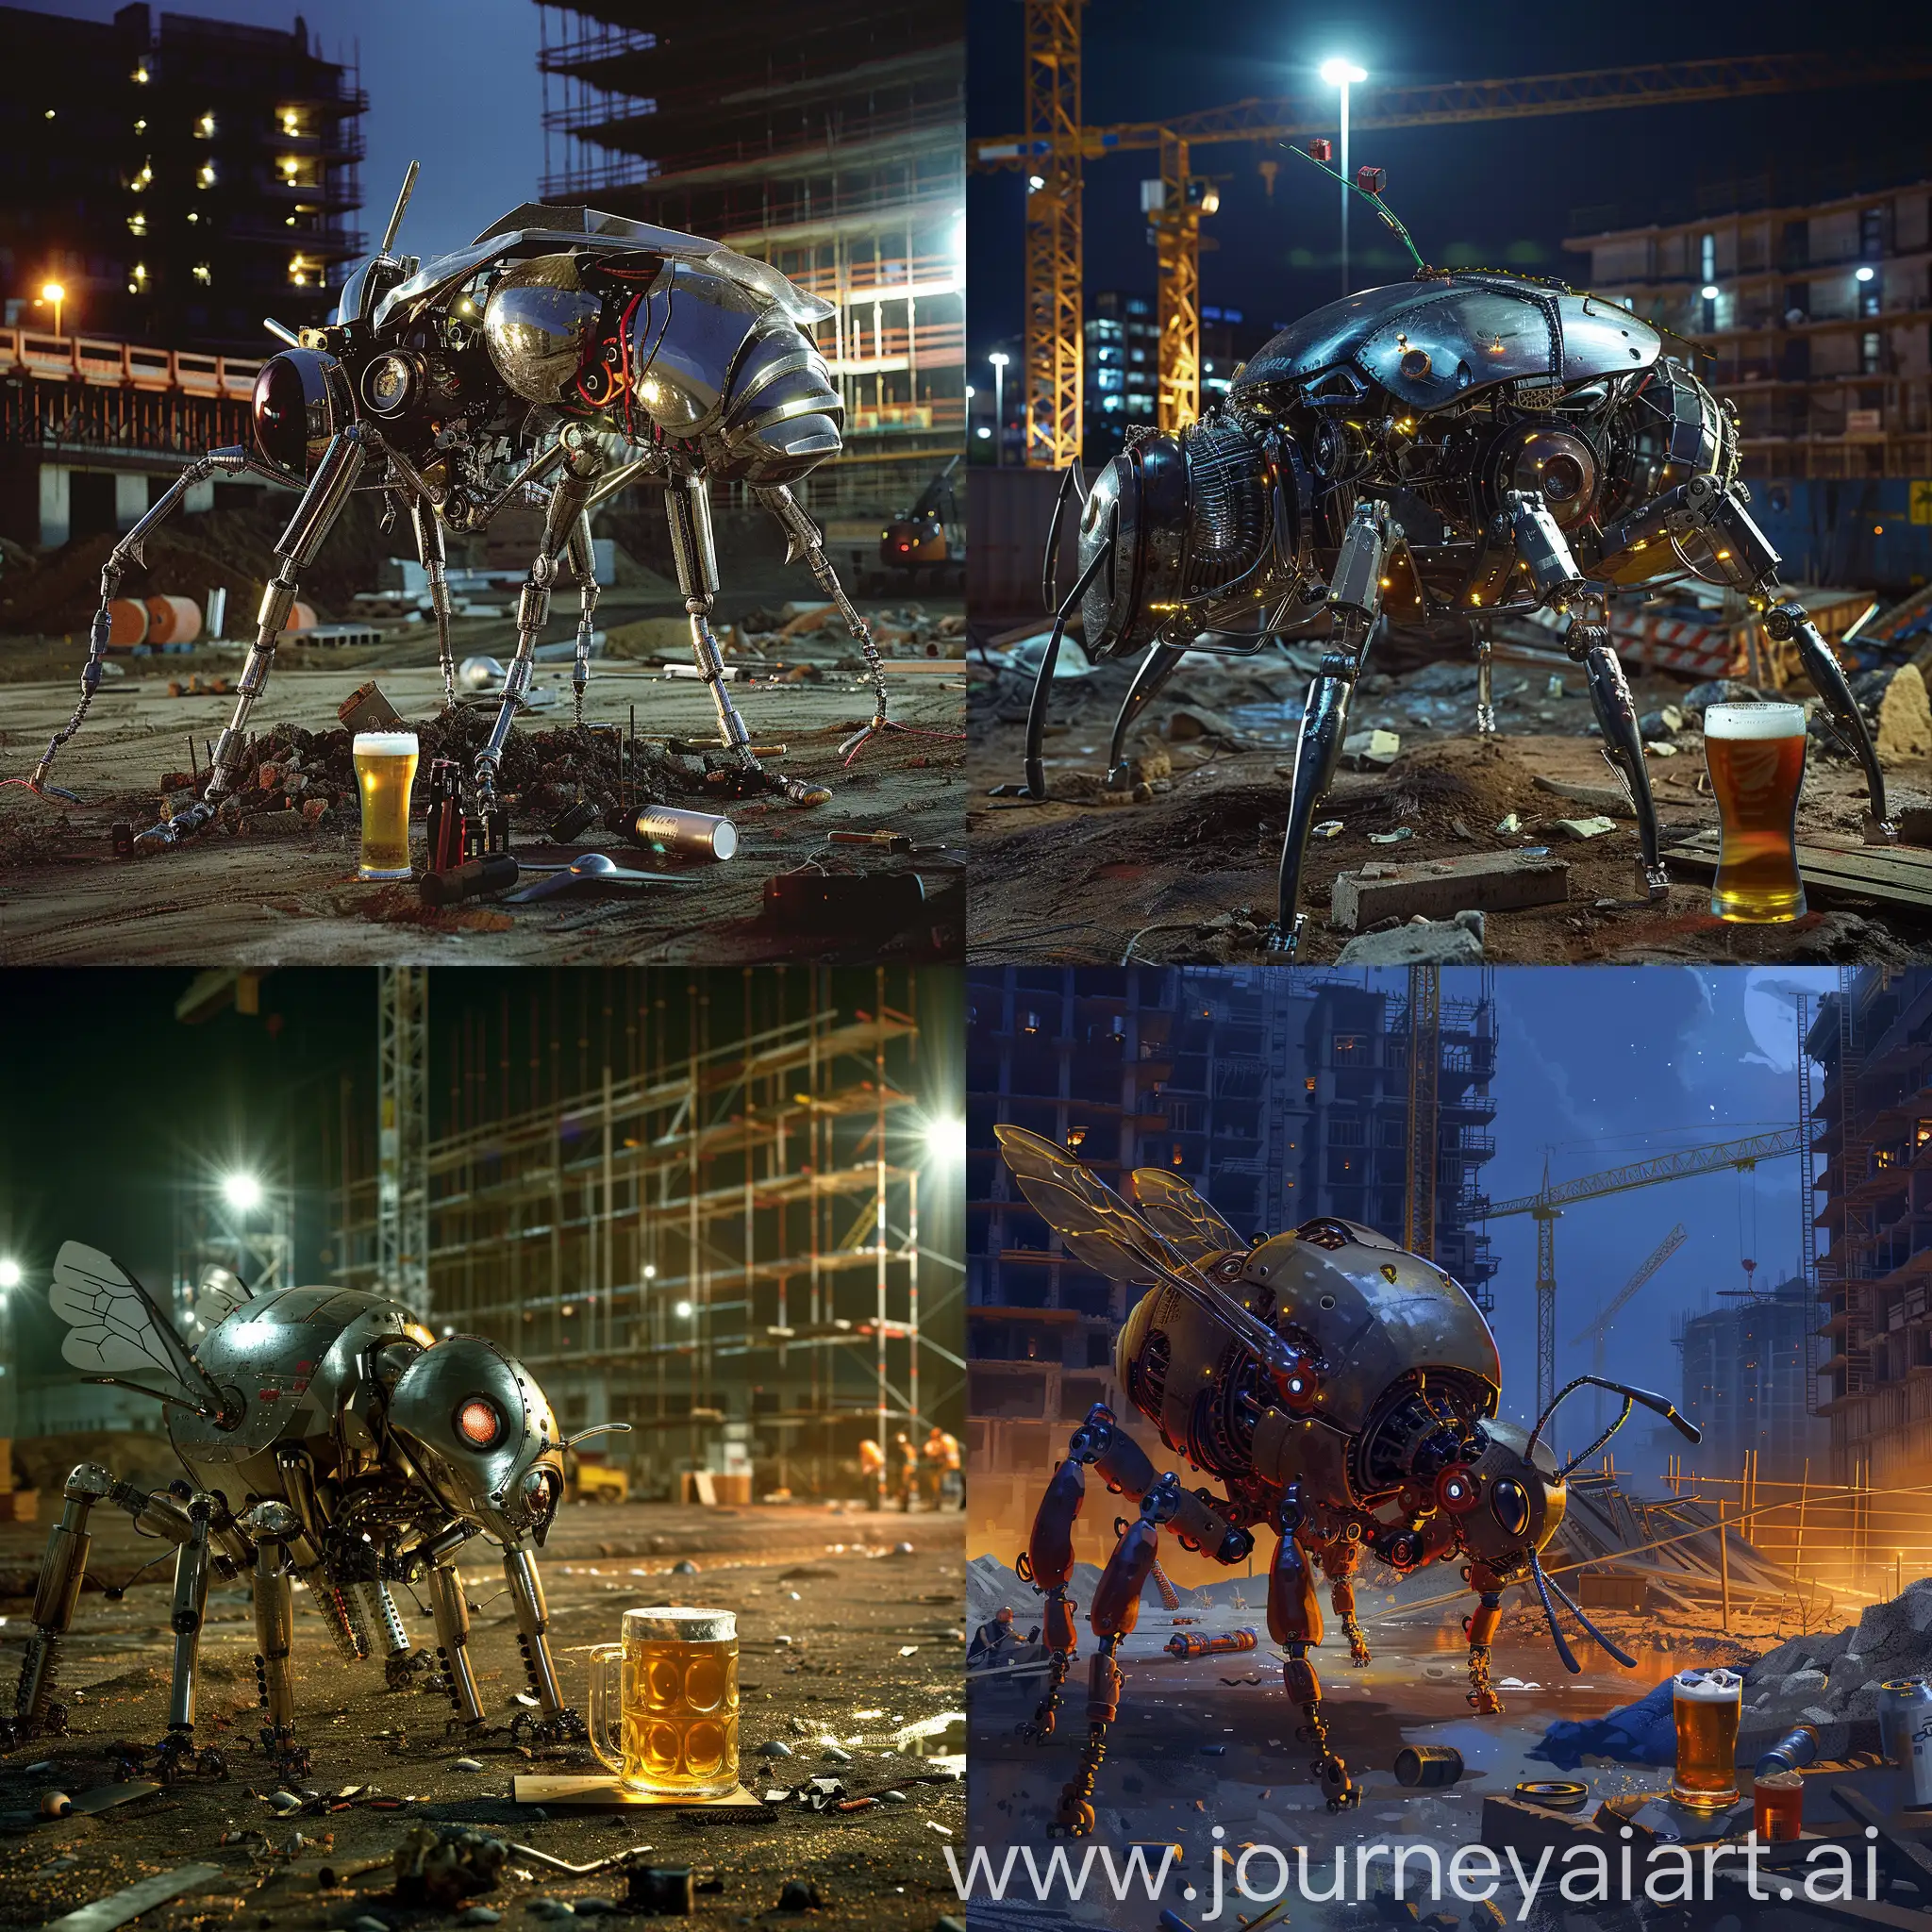 Metallic-RobotBee-Construction-Site-Night-Scene-with-Beer